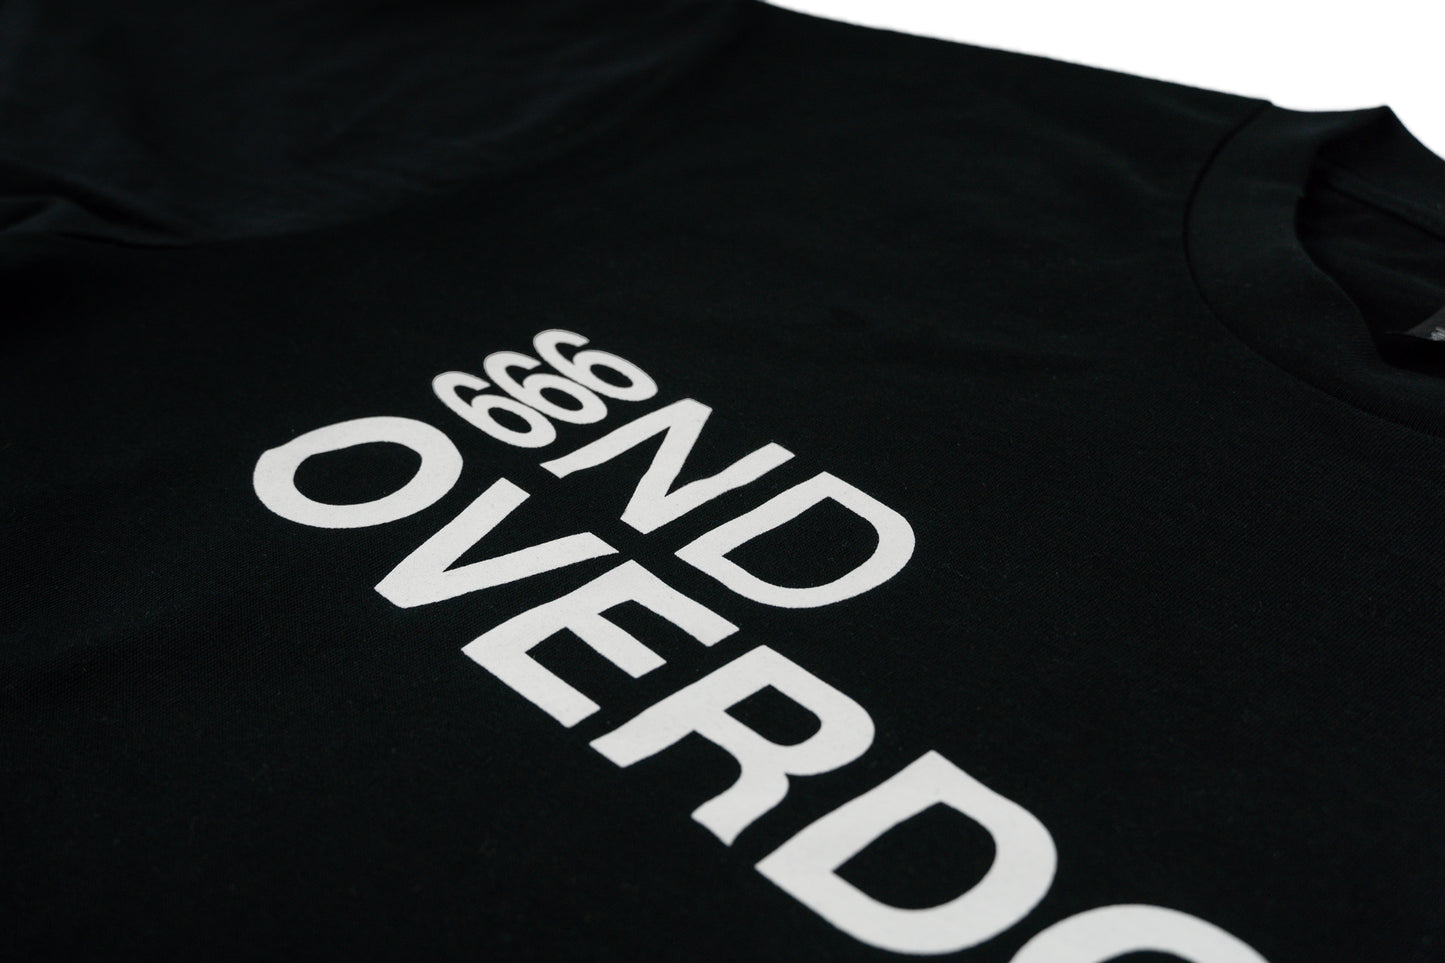 'End Overdose' T-Shirt